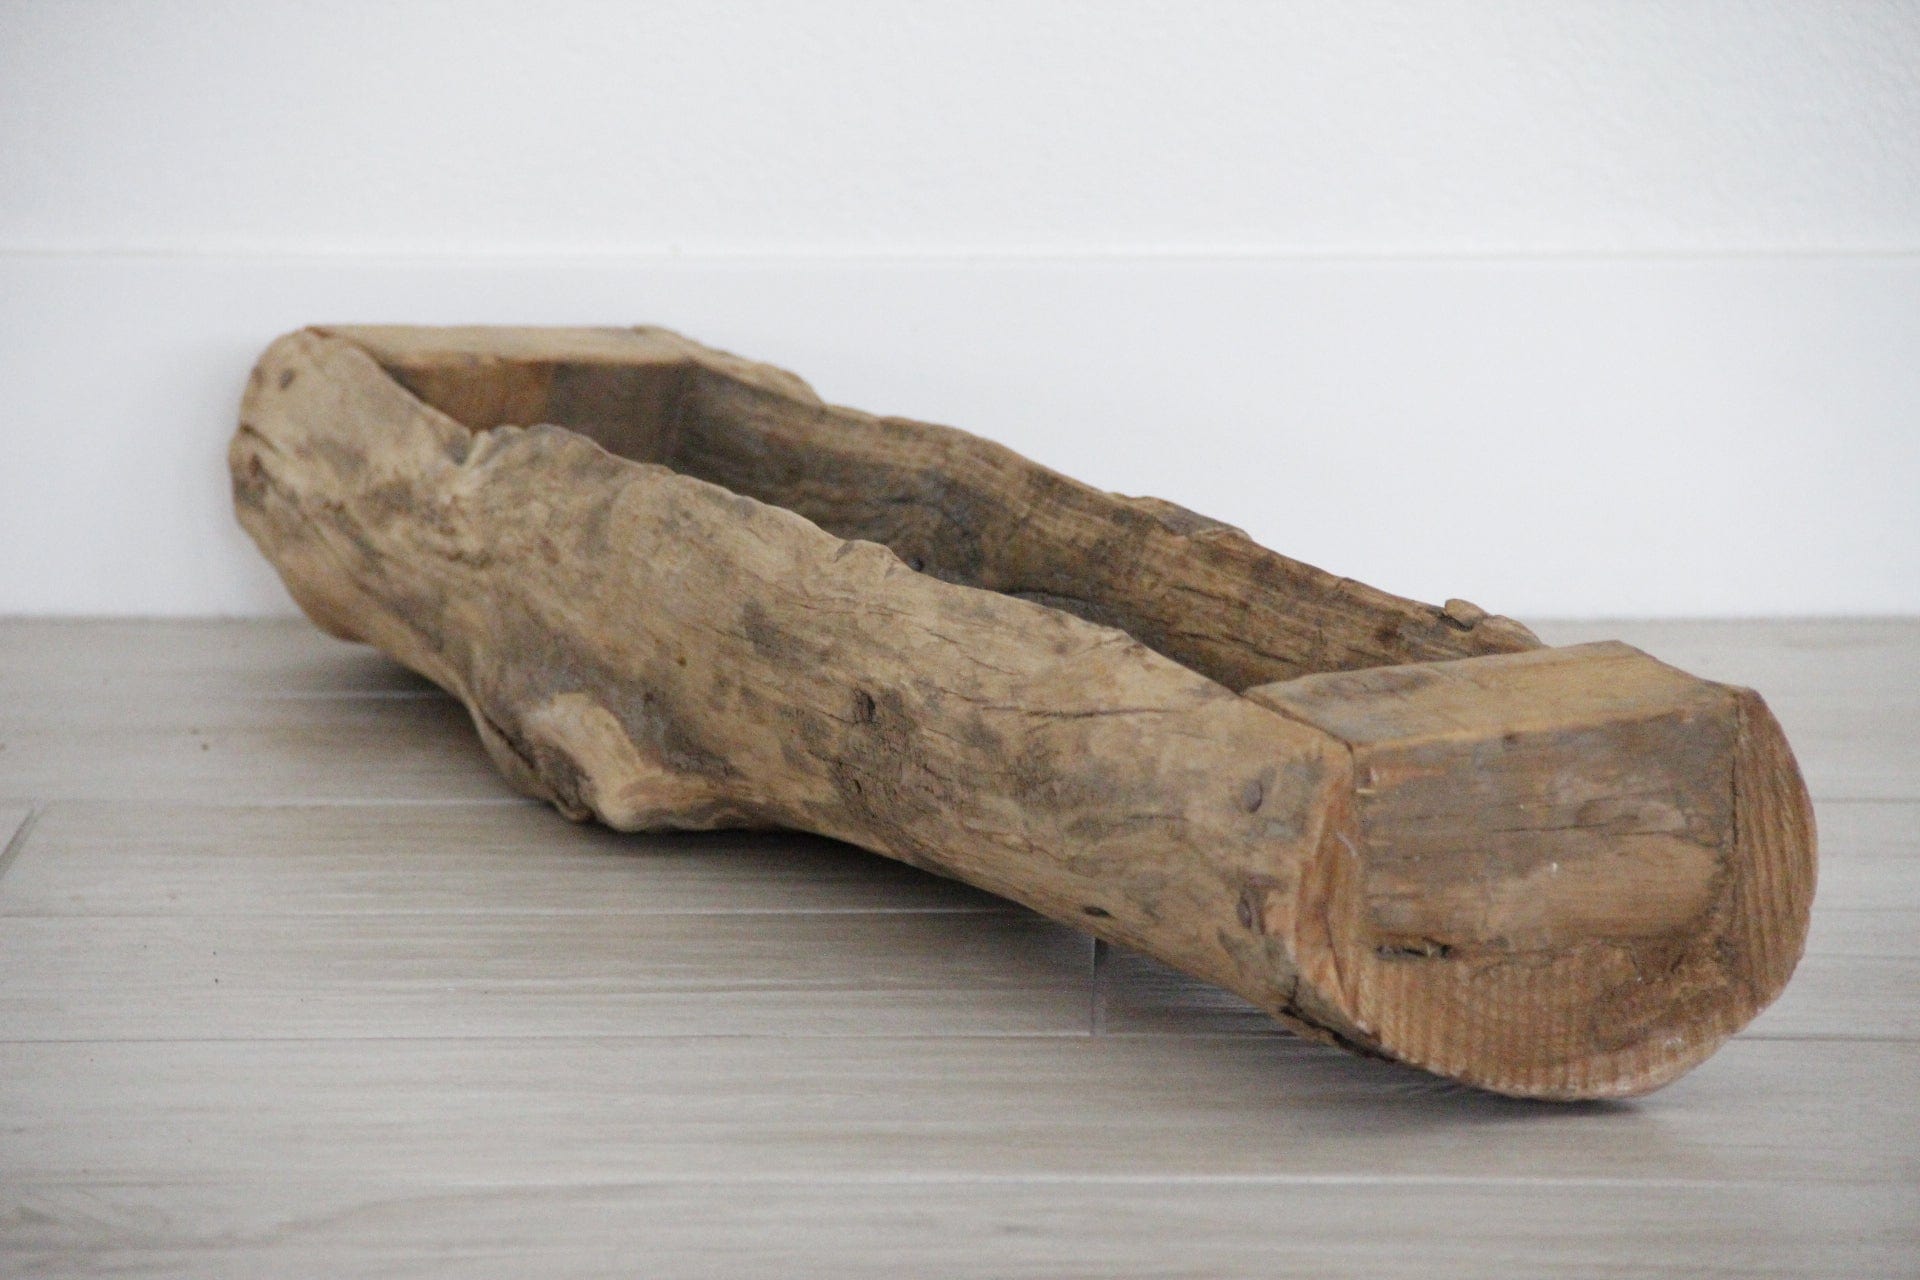 Antique Wood Trough | Rustic Hand Carved Vessel vessel